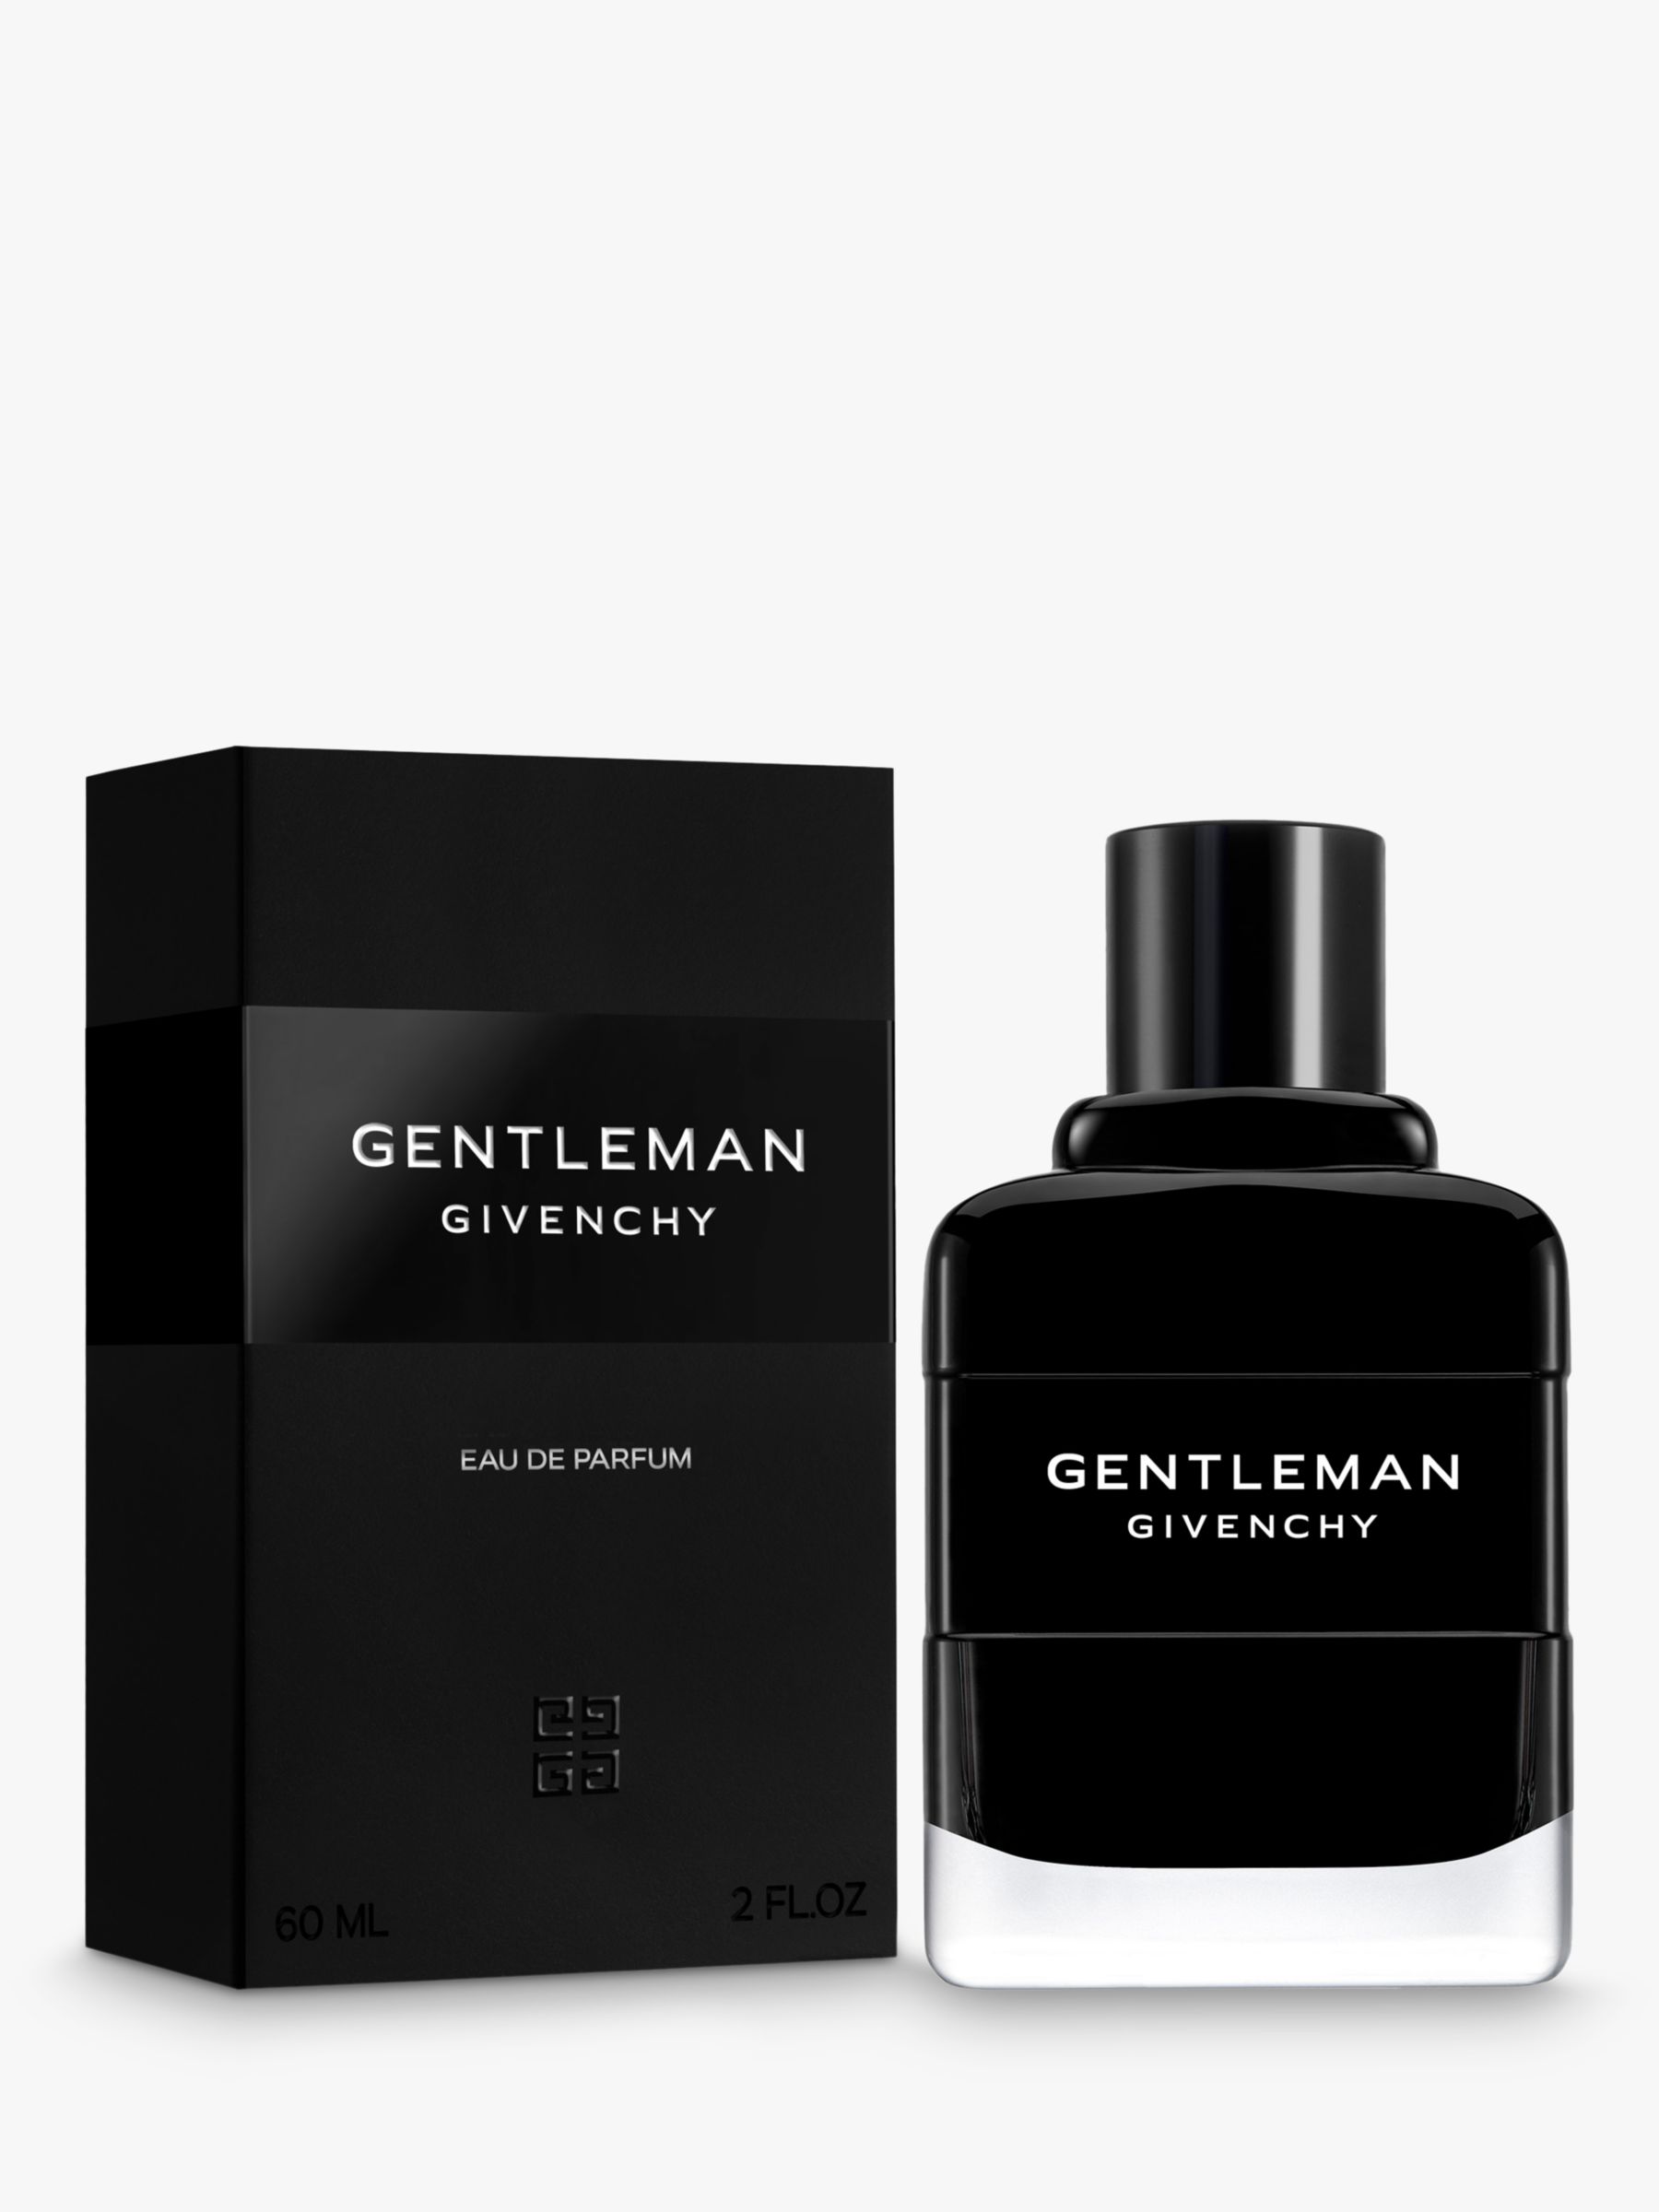 Givenchy Gentleman Eau de Parfum, 60ml at John Lewis & Partners